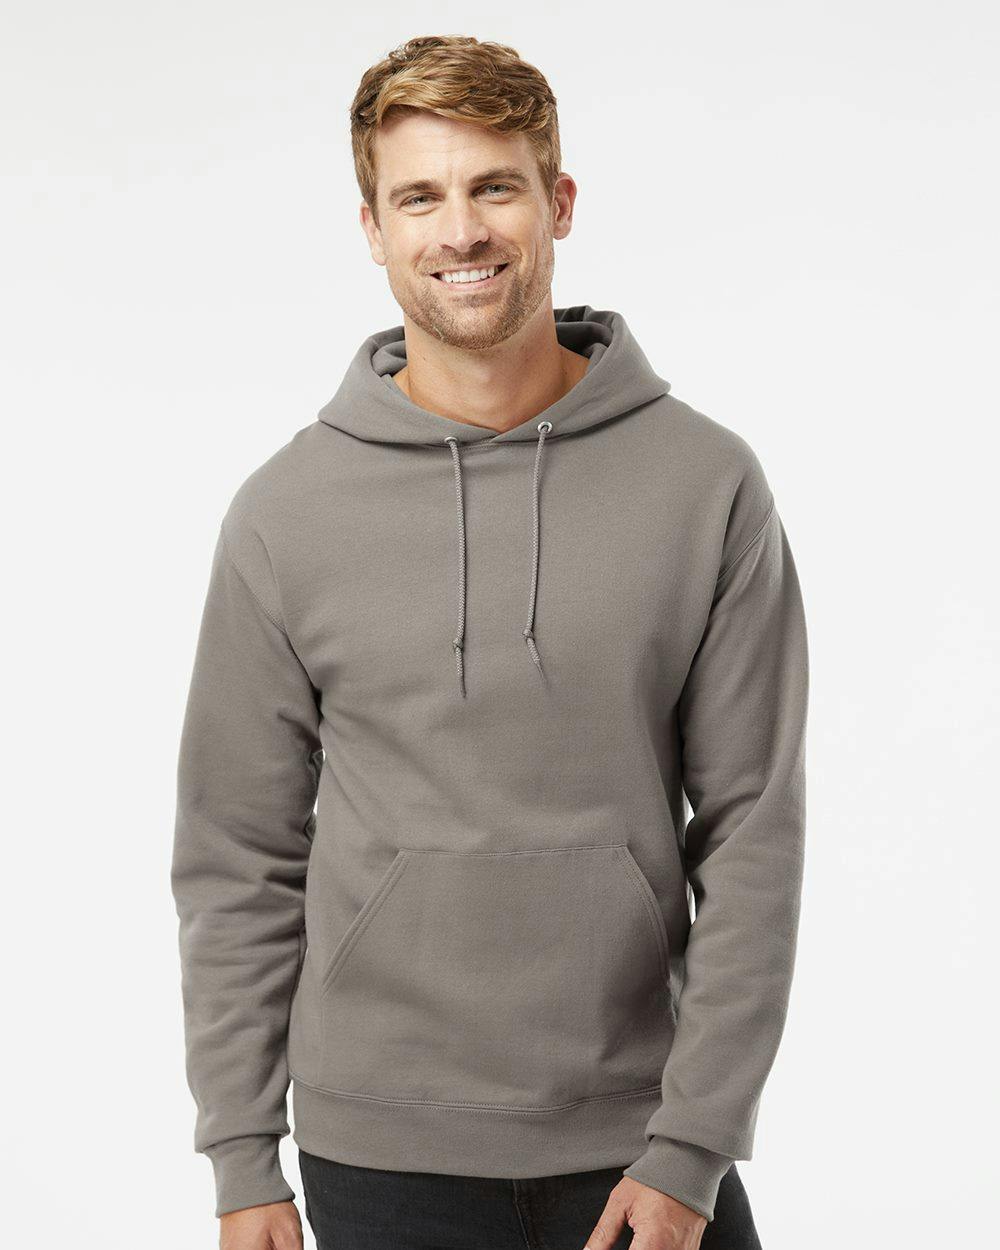 Image for NuBlend® Hooded Sweatshirt - 996MR